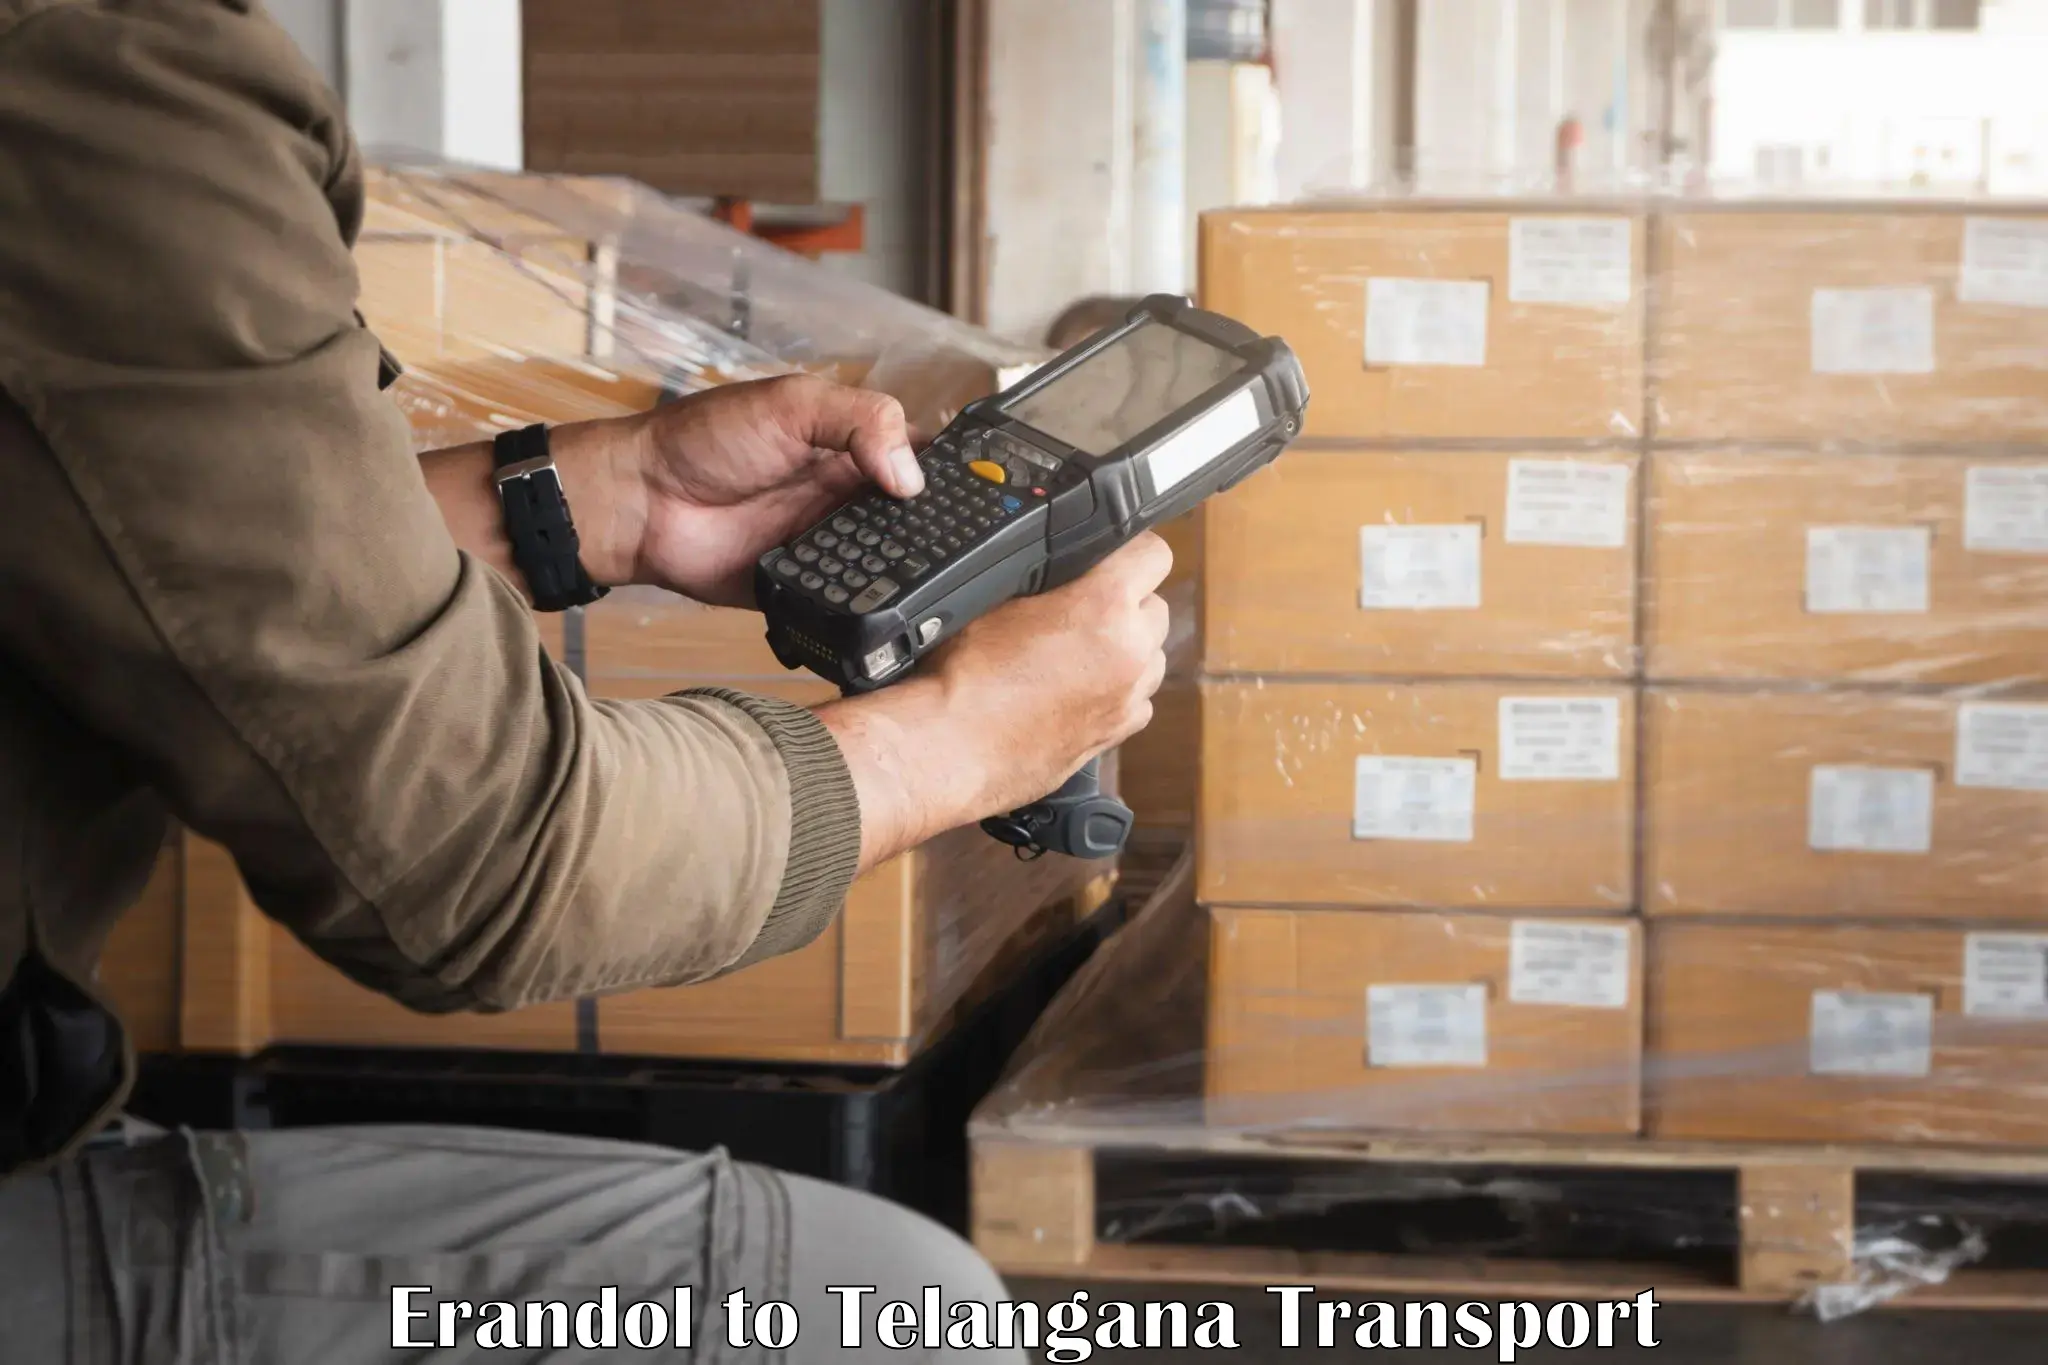 Delivery service Erandol to Odela